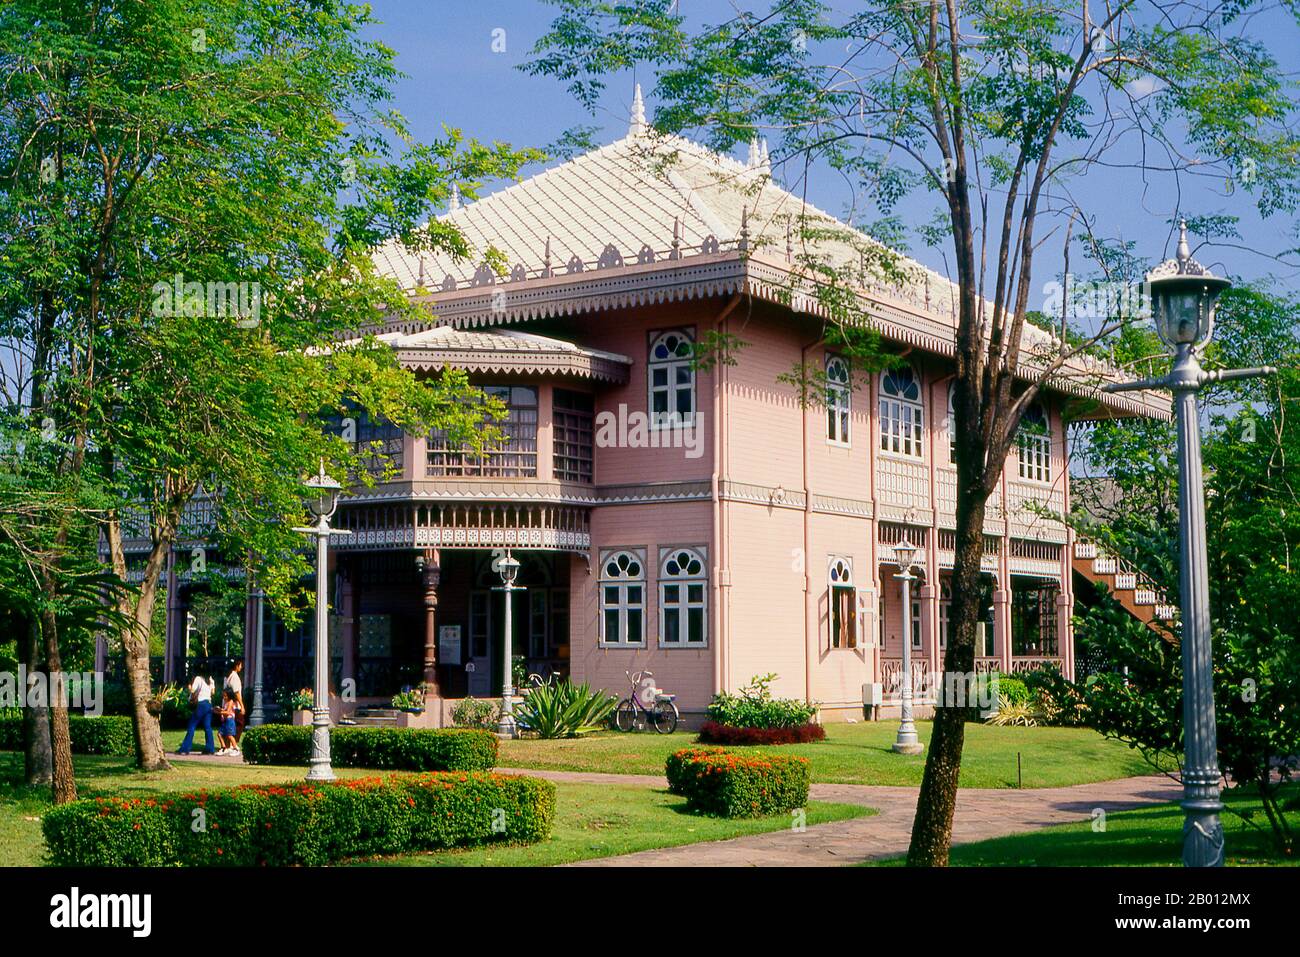 Thailand: Suan Si Ruedu (Four Seasons Garden Villa), Vimanmek Mansion, Dusit Park, Bangkok.  Suan Si Ruedu was the royal residence of Queen Saovabha Phongsri (Queen Consort of Thailand) and Princess Valaya Alongkorn (daughter of King Chulalongkorn).  The Vimanmek Mansion is a former royal palace and is also known as the Vimanmek Teak Mansion or Vimanmek Palace.  Vimanmek Mansion was built in 1900 by King Rama V (King Chulalongkorn) by having the Munthatu Rattanaroj Residence in Chuthathuj Rachathan at Ko Sichang, Chonburi, dismantled and reassembled in Dusit Garden. Stock Photo